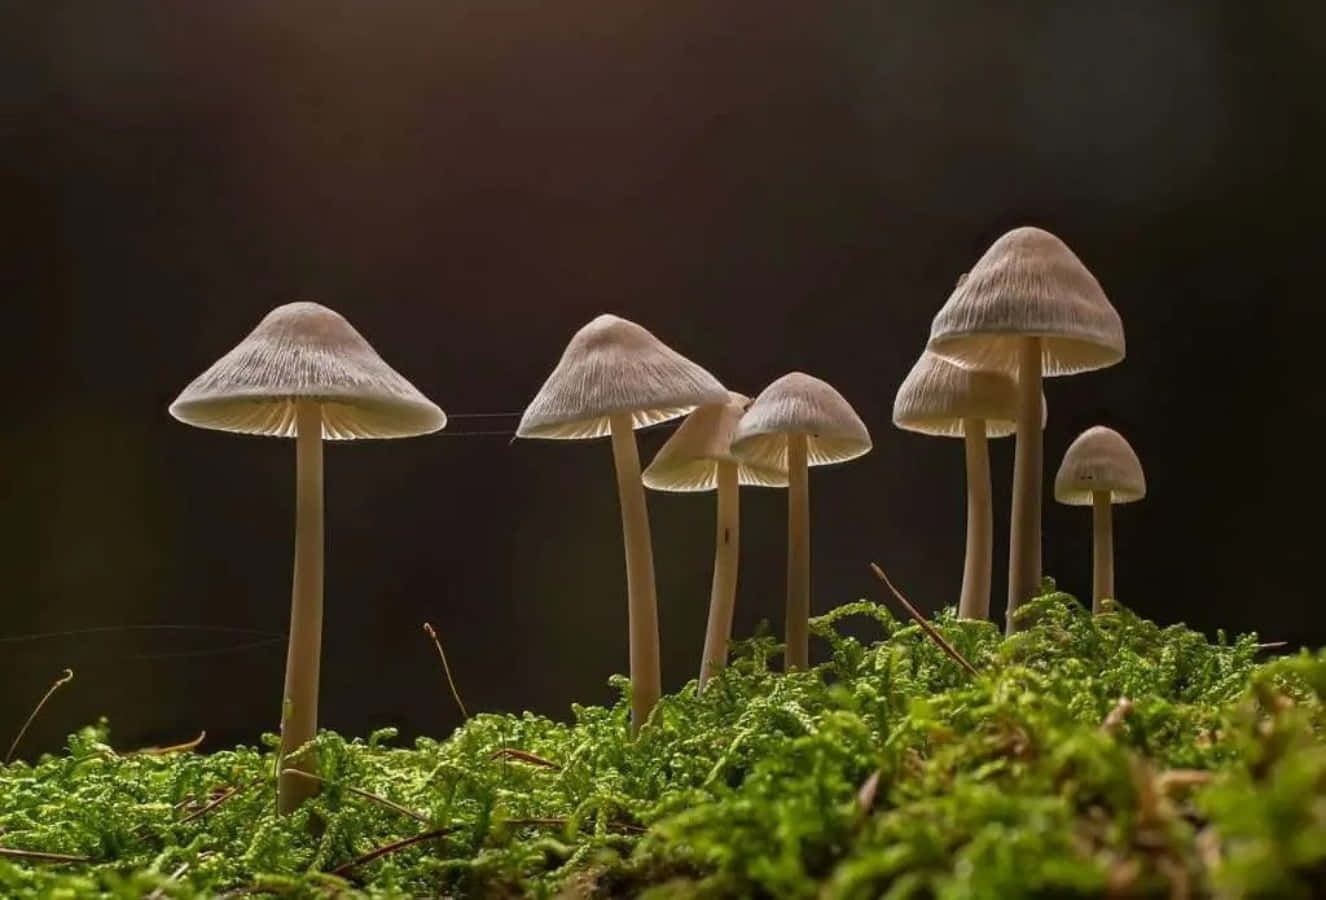 Enjoy the Magic of Mushrooms